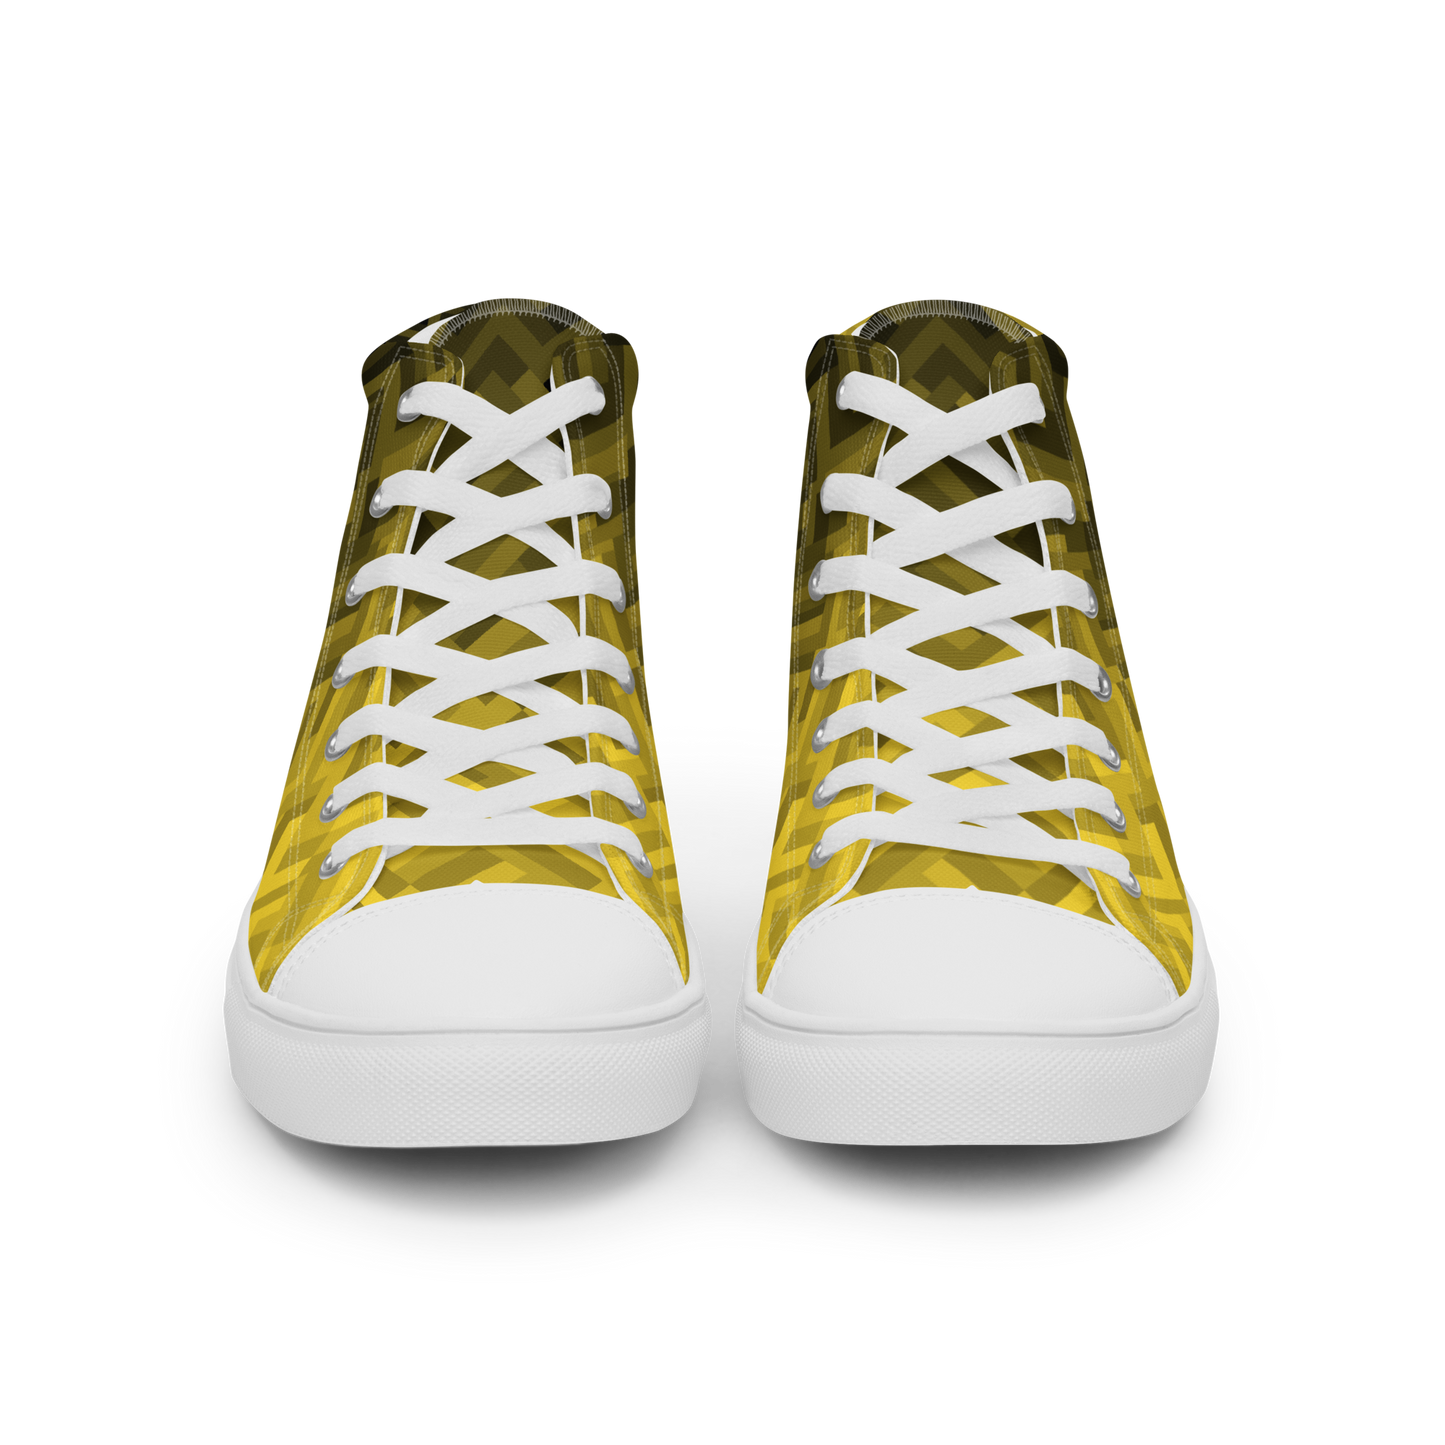 Men's Canvas Sneakers ❯ Polygonal Gradient ❯ Rayon